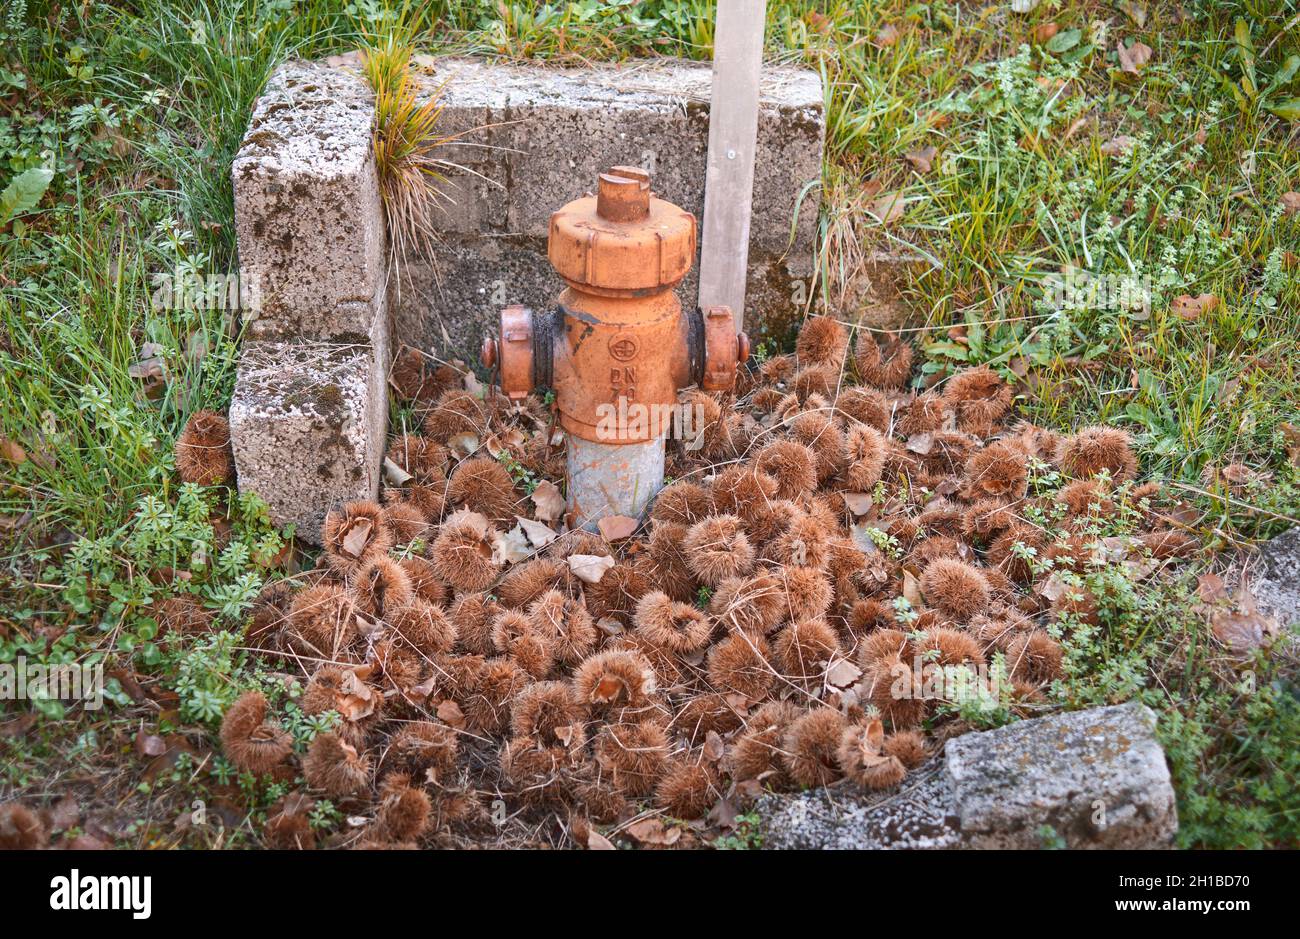 Carpet Of Chestnut Husks Around A Fire Hydrant. Autumn Concept. Castanea Sativa Stock Photo